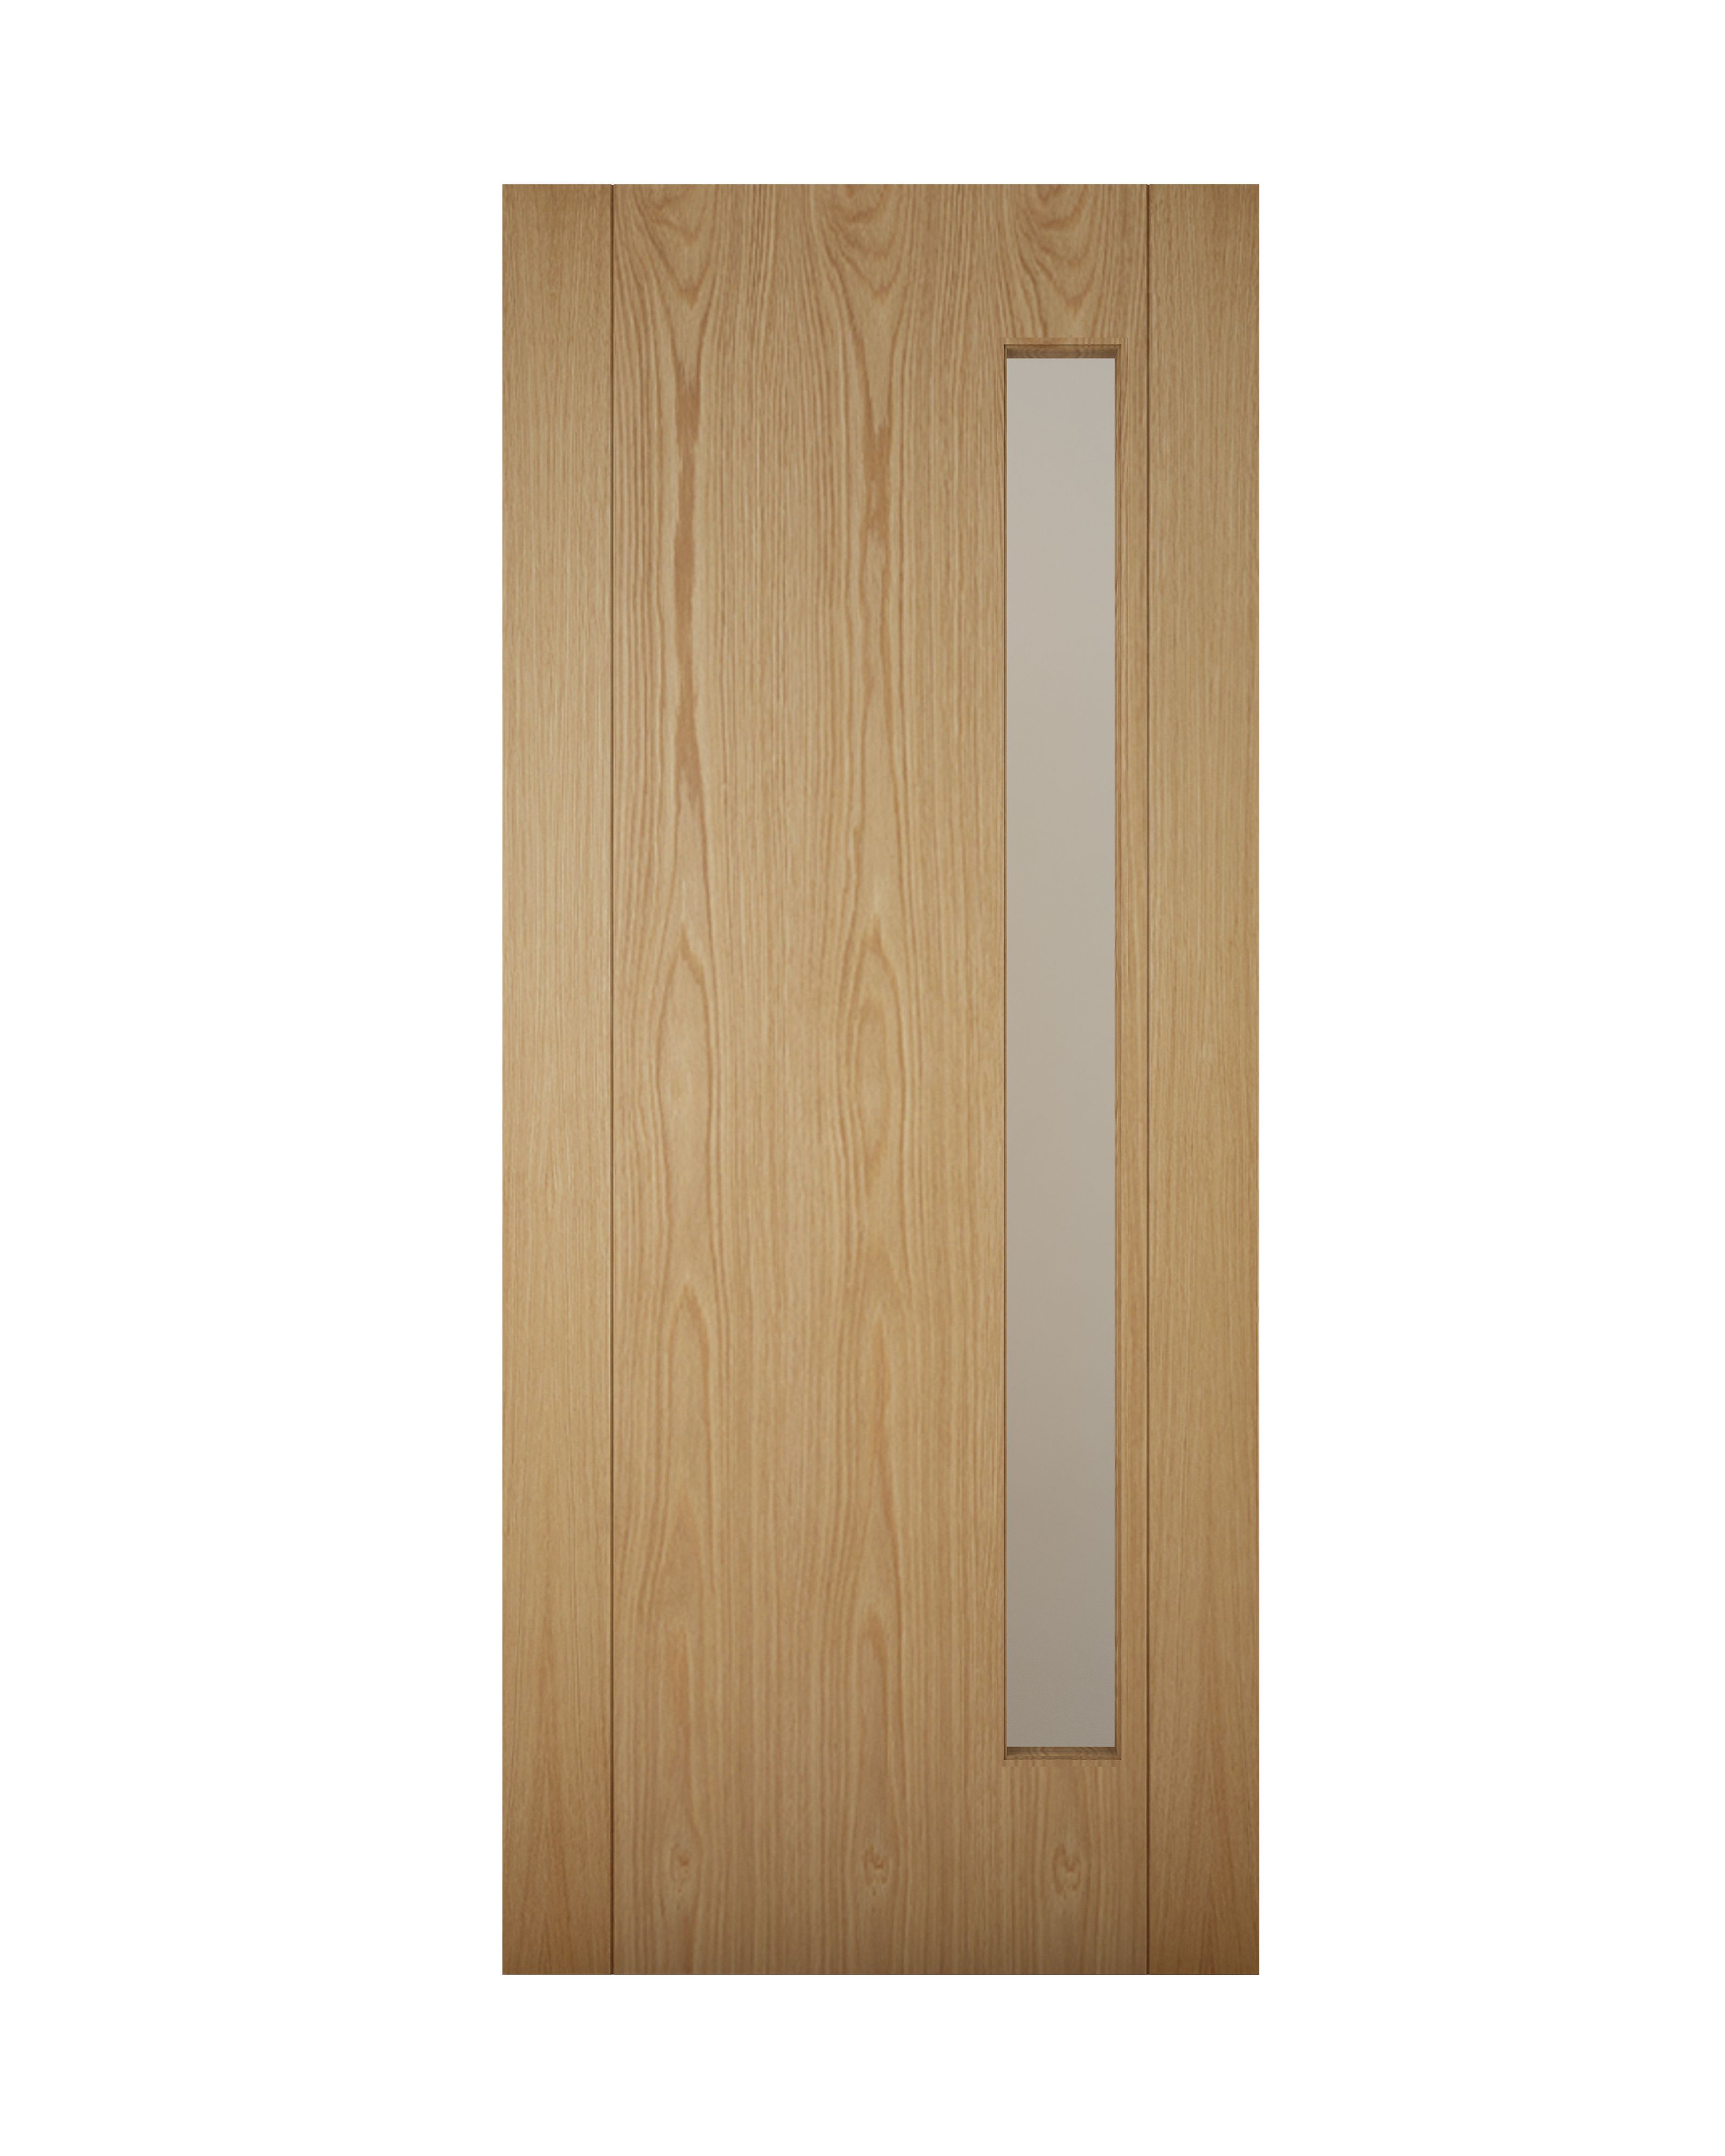 Glazed Contemporary White oak veneer Left & RHed Front Door, (H)1981mm (W)762mm